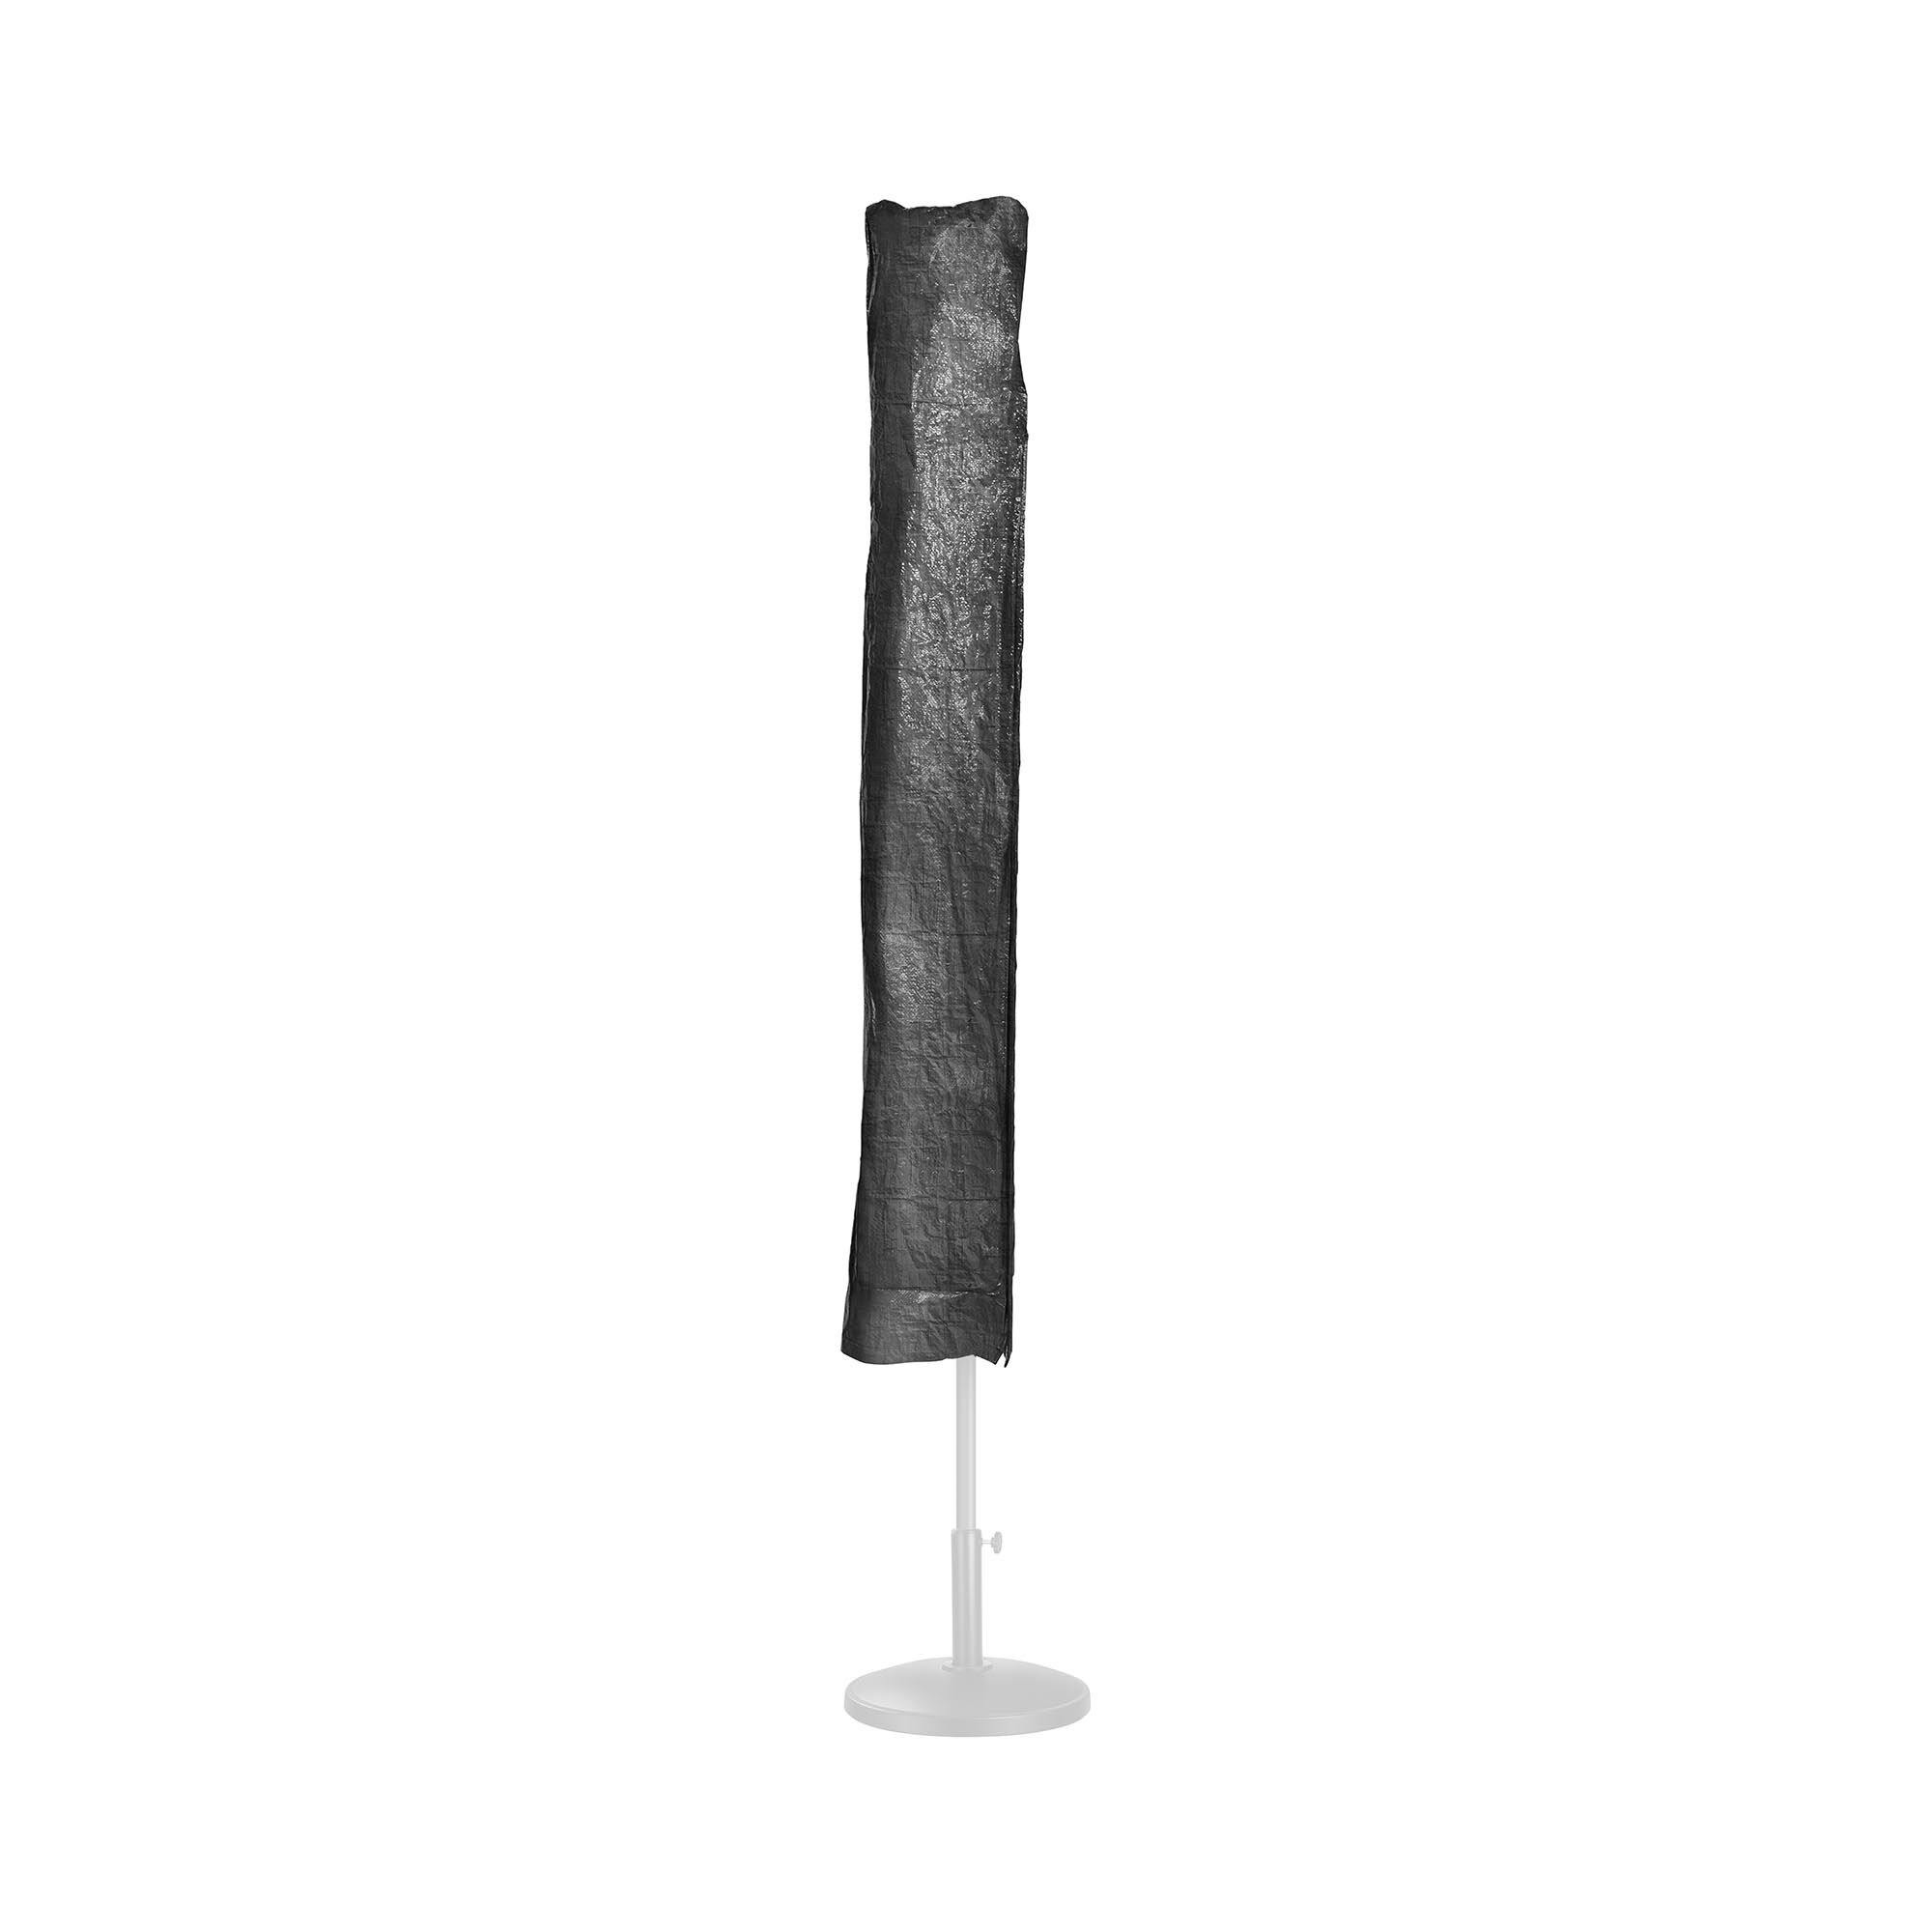 Uniprodo Cantilever Parasol Cover - black